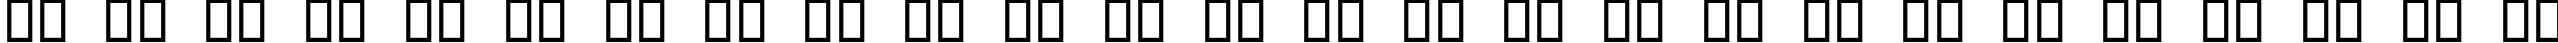 Пример написания английского алфавита шрифтом Mangal